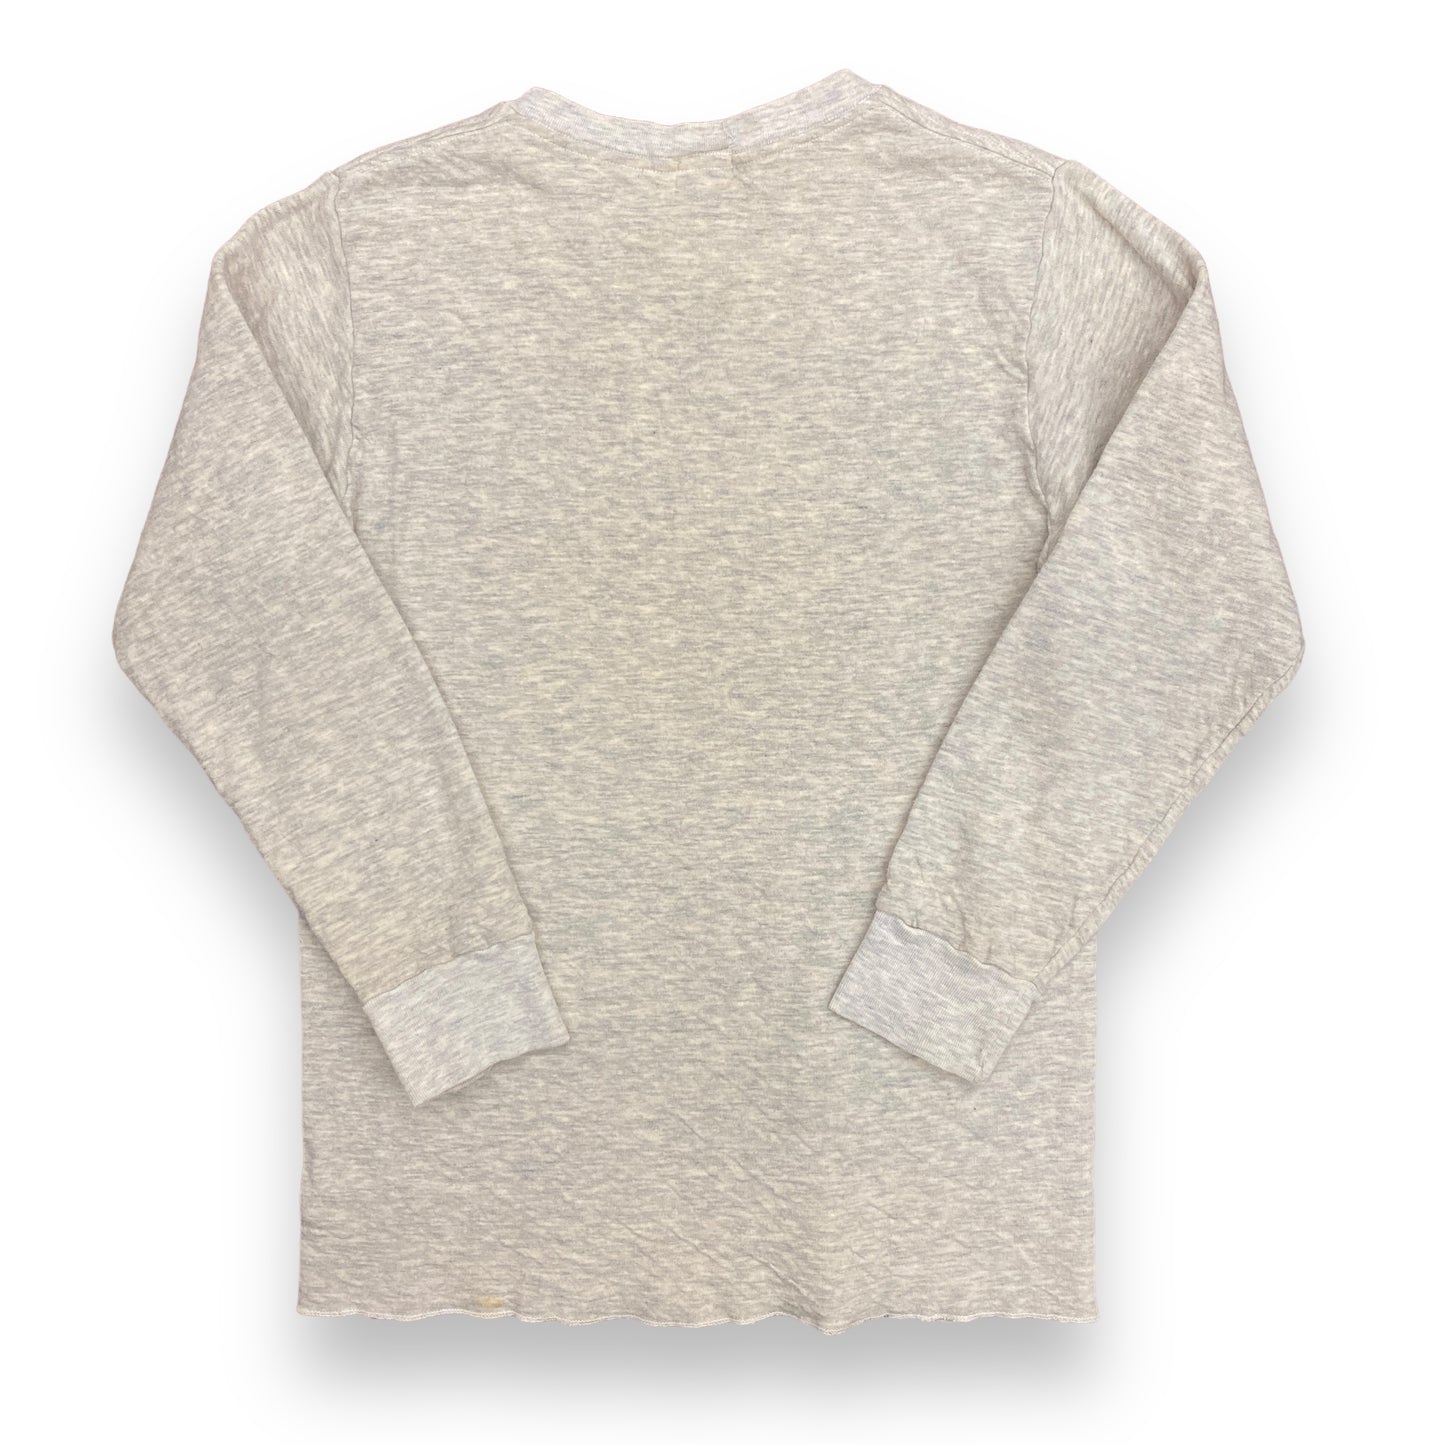 1950s Duofold Gray Thermal Shirt - Size Medium